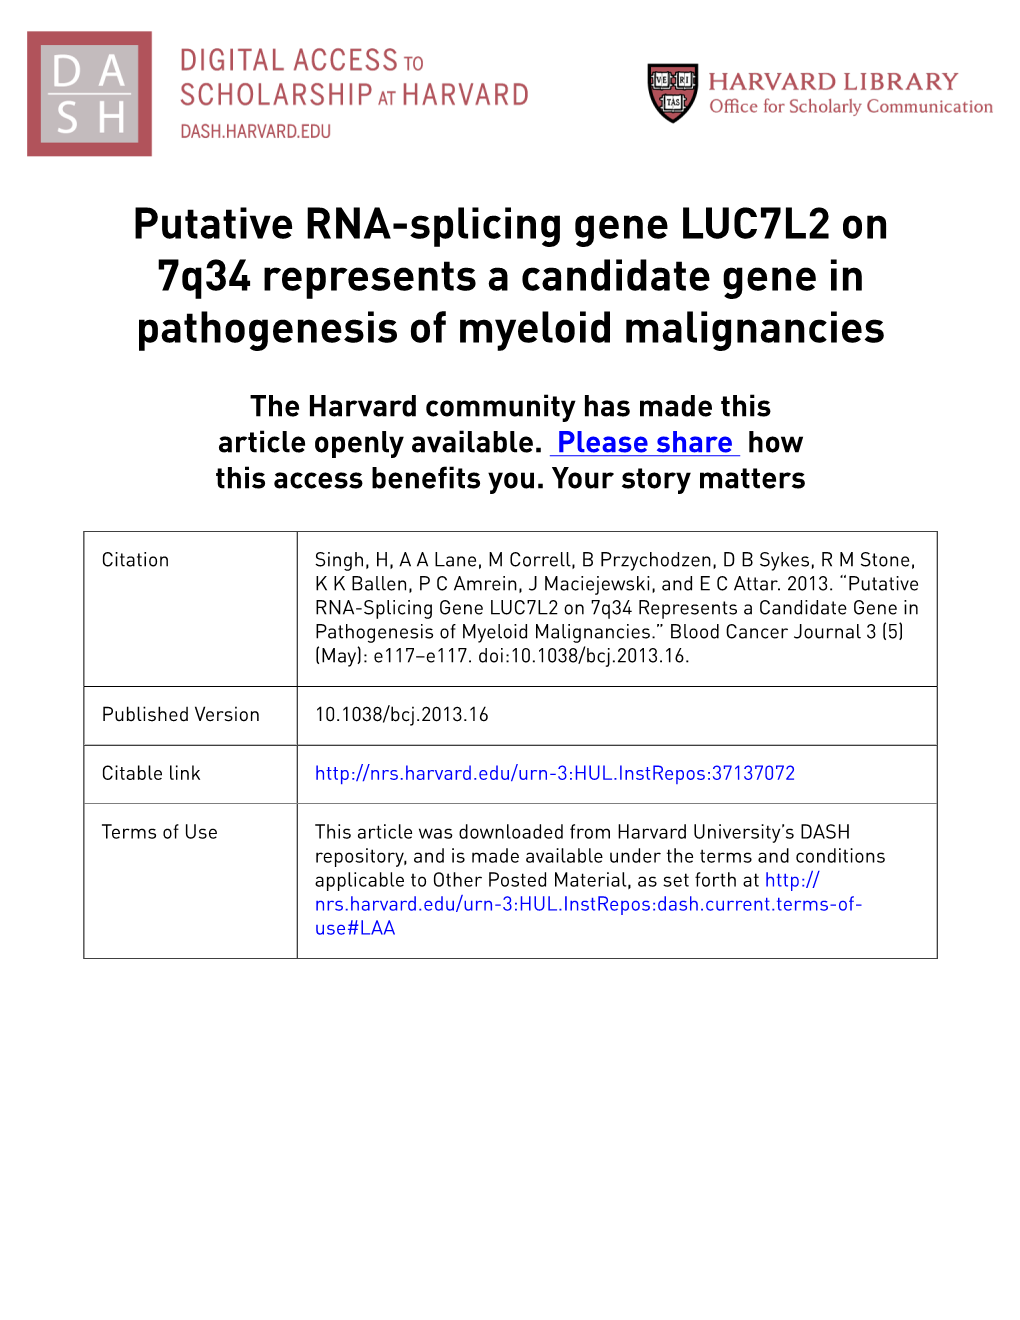 Putative RNA-Splicing Gene LUC7L2 on 7Q34 Represents a Candidate Gene in Pathogenesis of Myeloid Malignancies